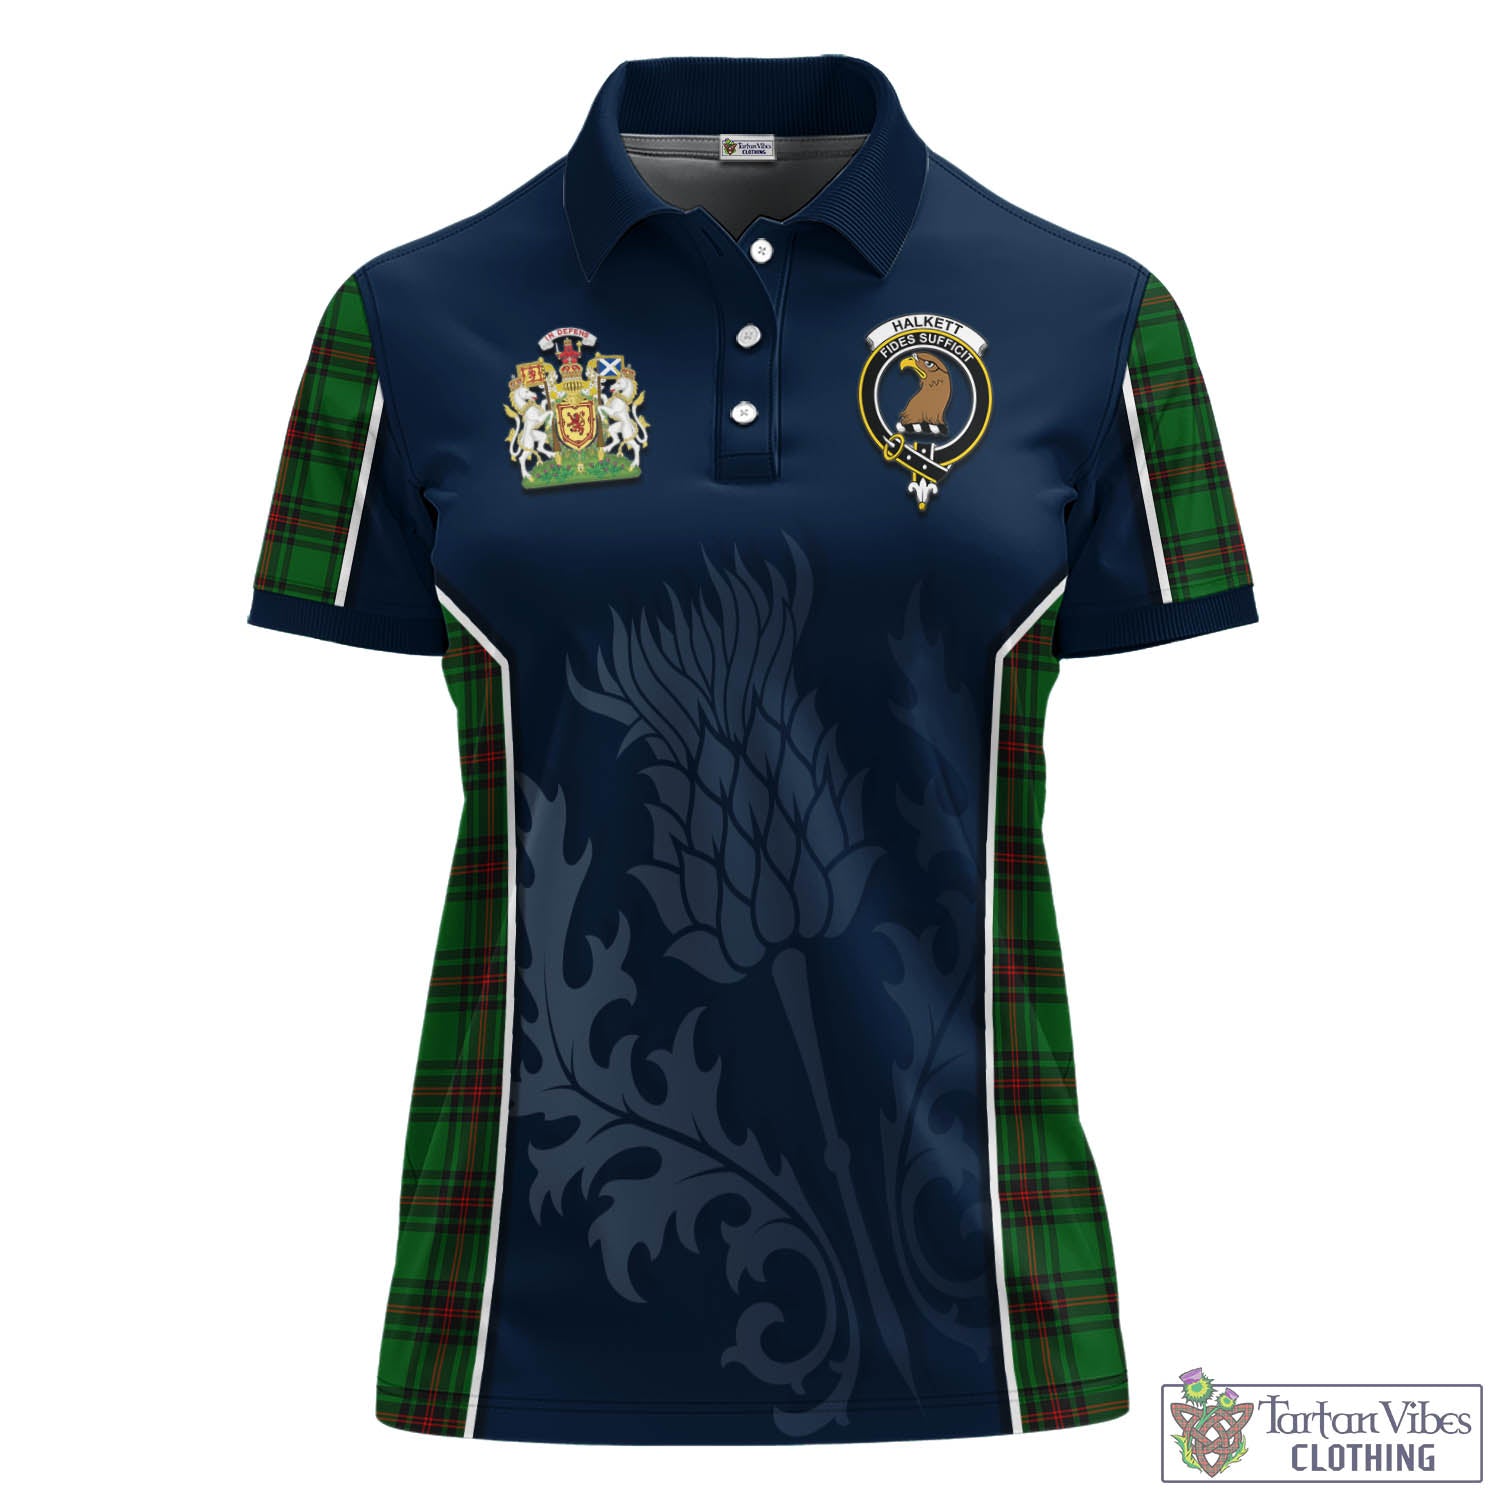 Tartan Vibes Clothing Halkett Tartan Women's Polo Shirt with Family Crest and Scottish Thistle Vibes Sport Style